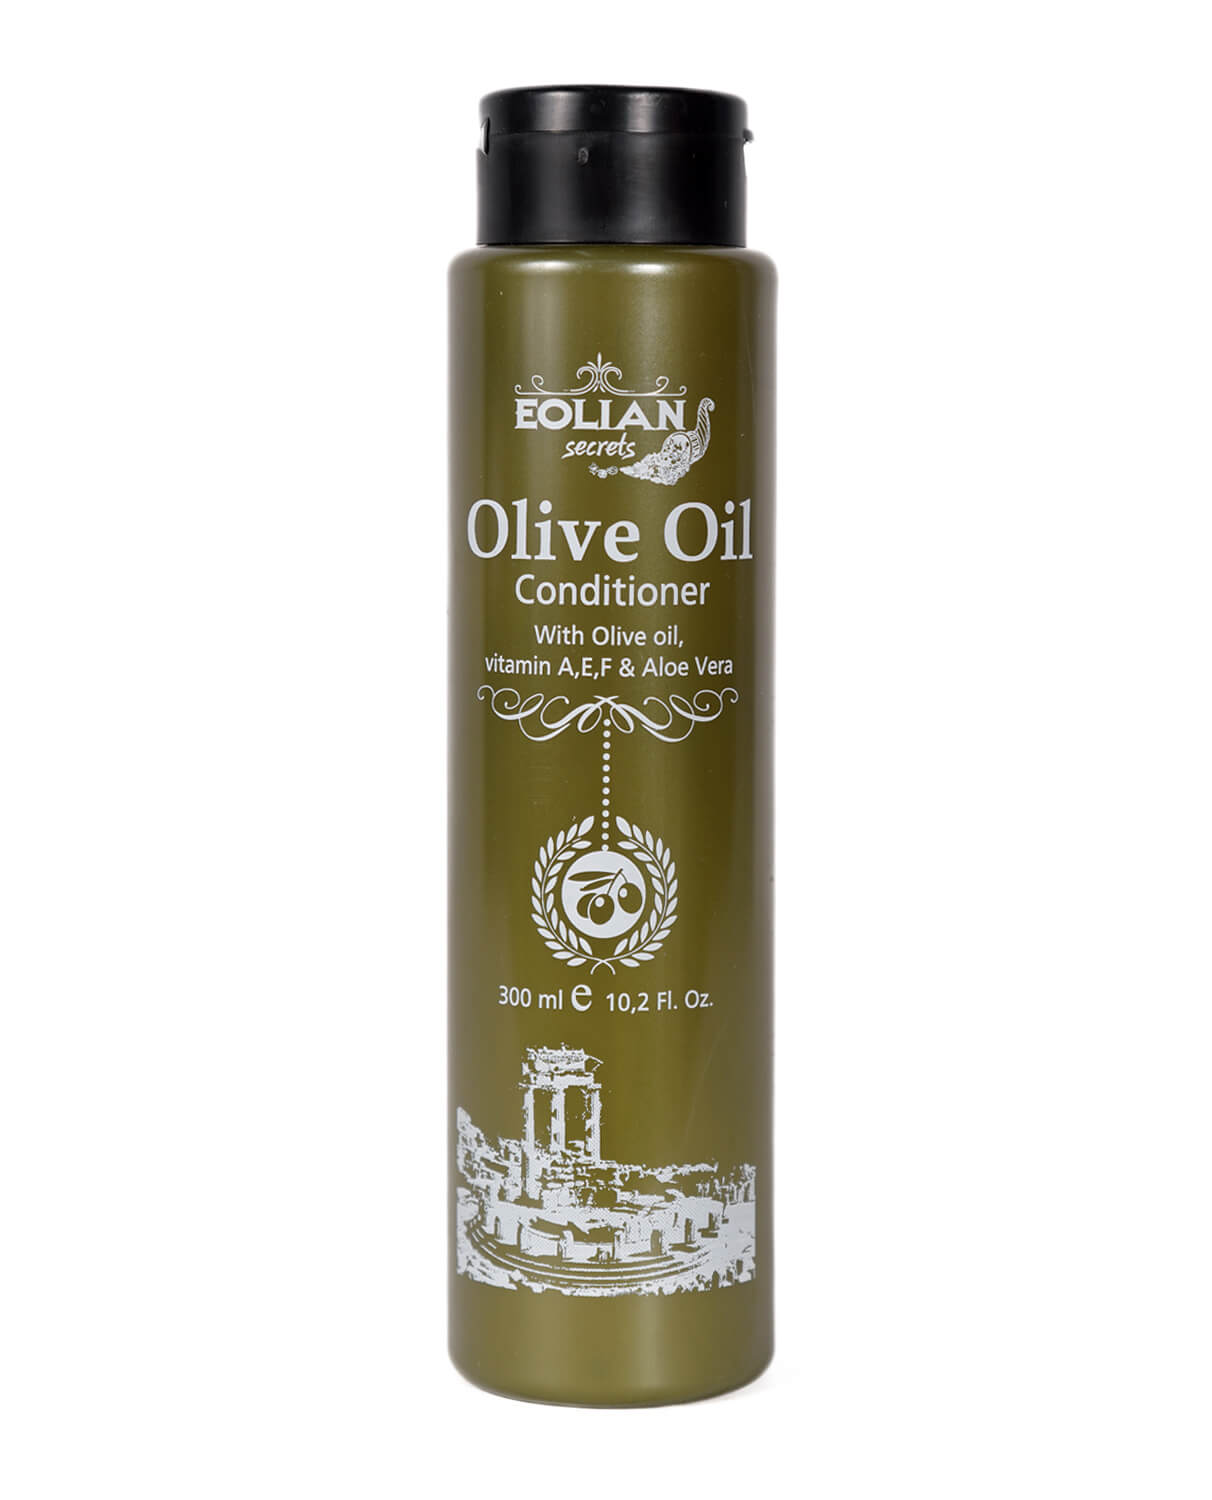 Eolian Secrets Olive Oil Conditioner, 300ml